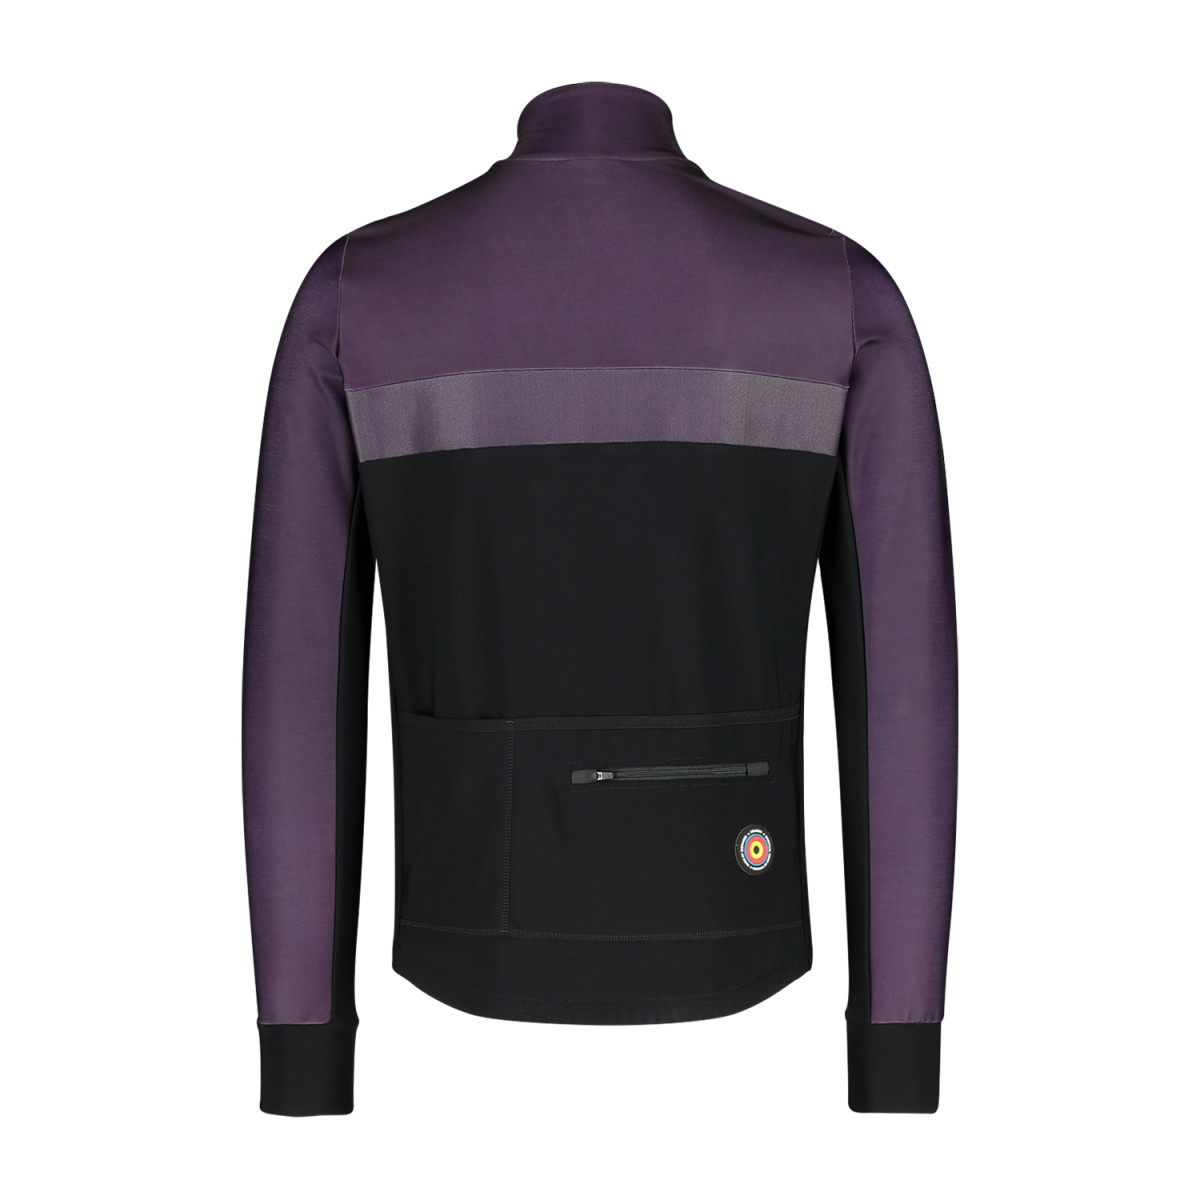 Bioracer Spitfire Tempest Pixel vyriški marškinėliai / Purple Black